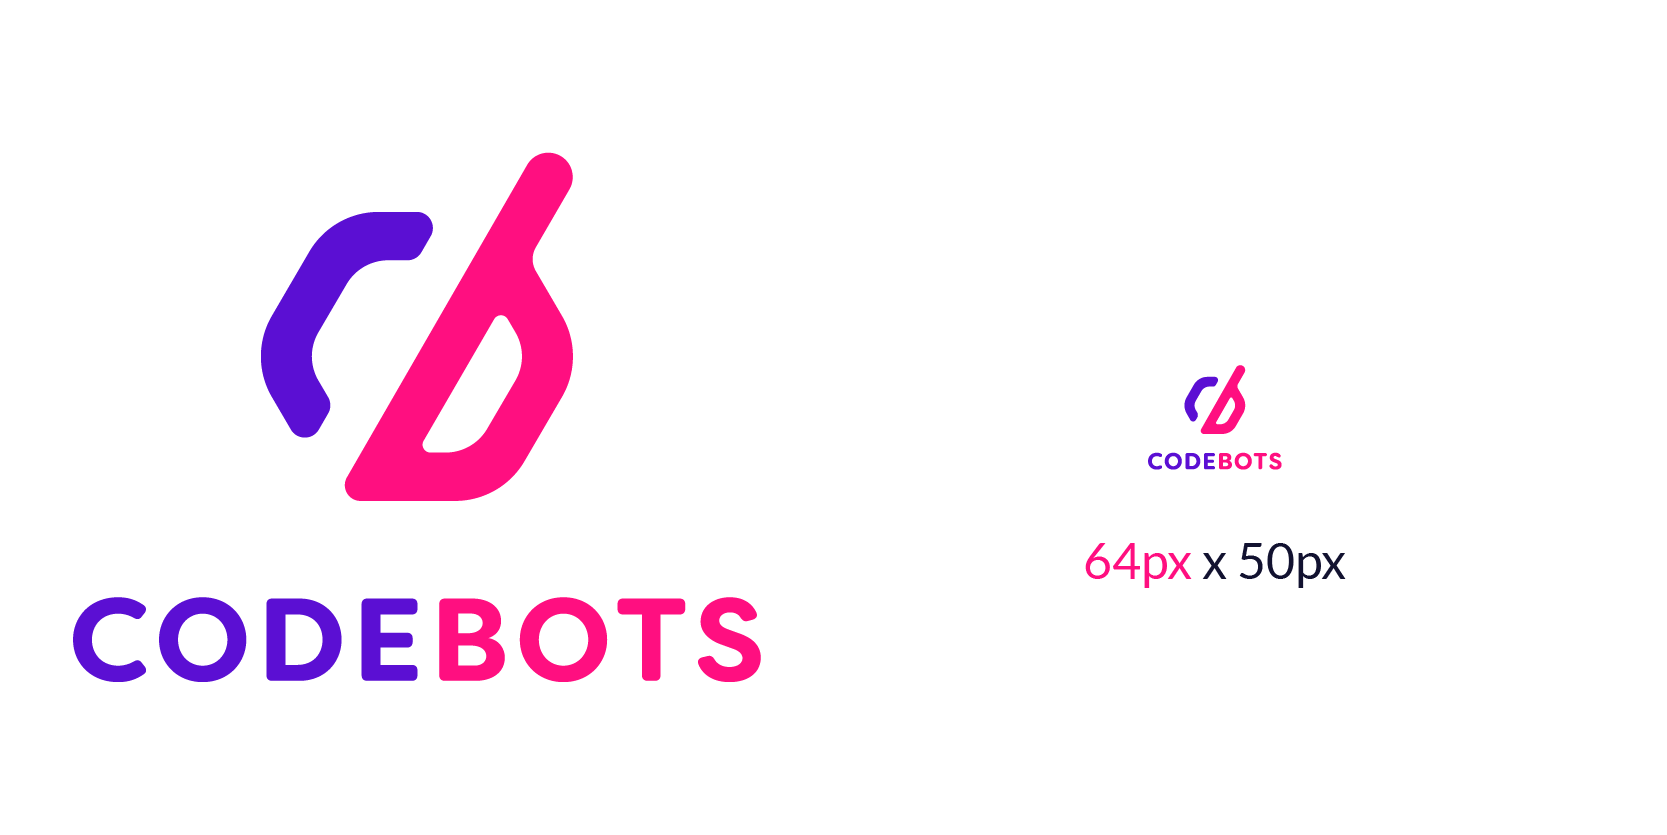 Codebots stacked min size logo